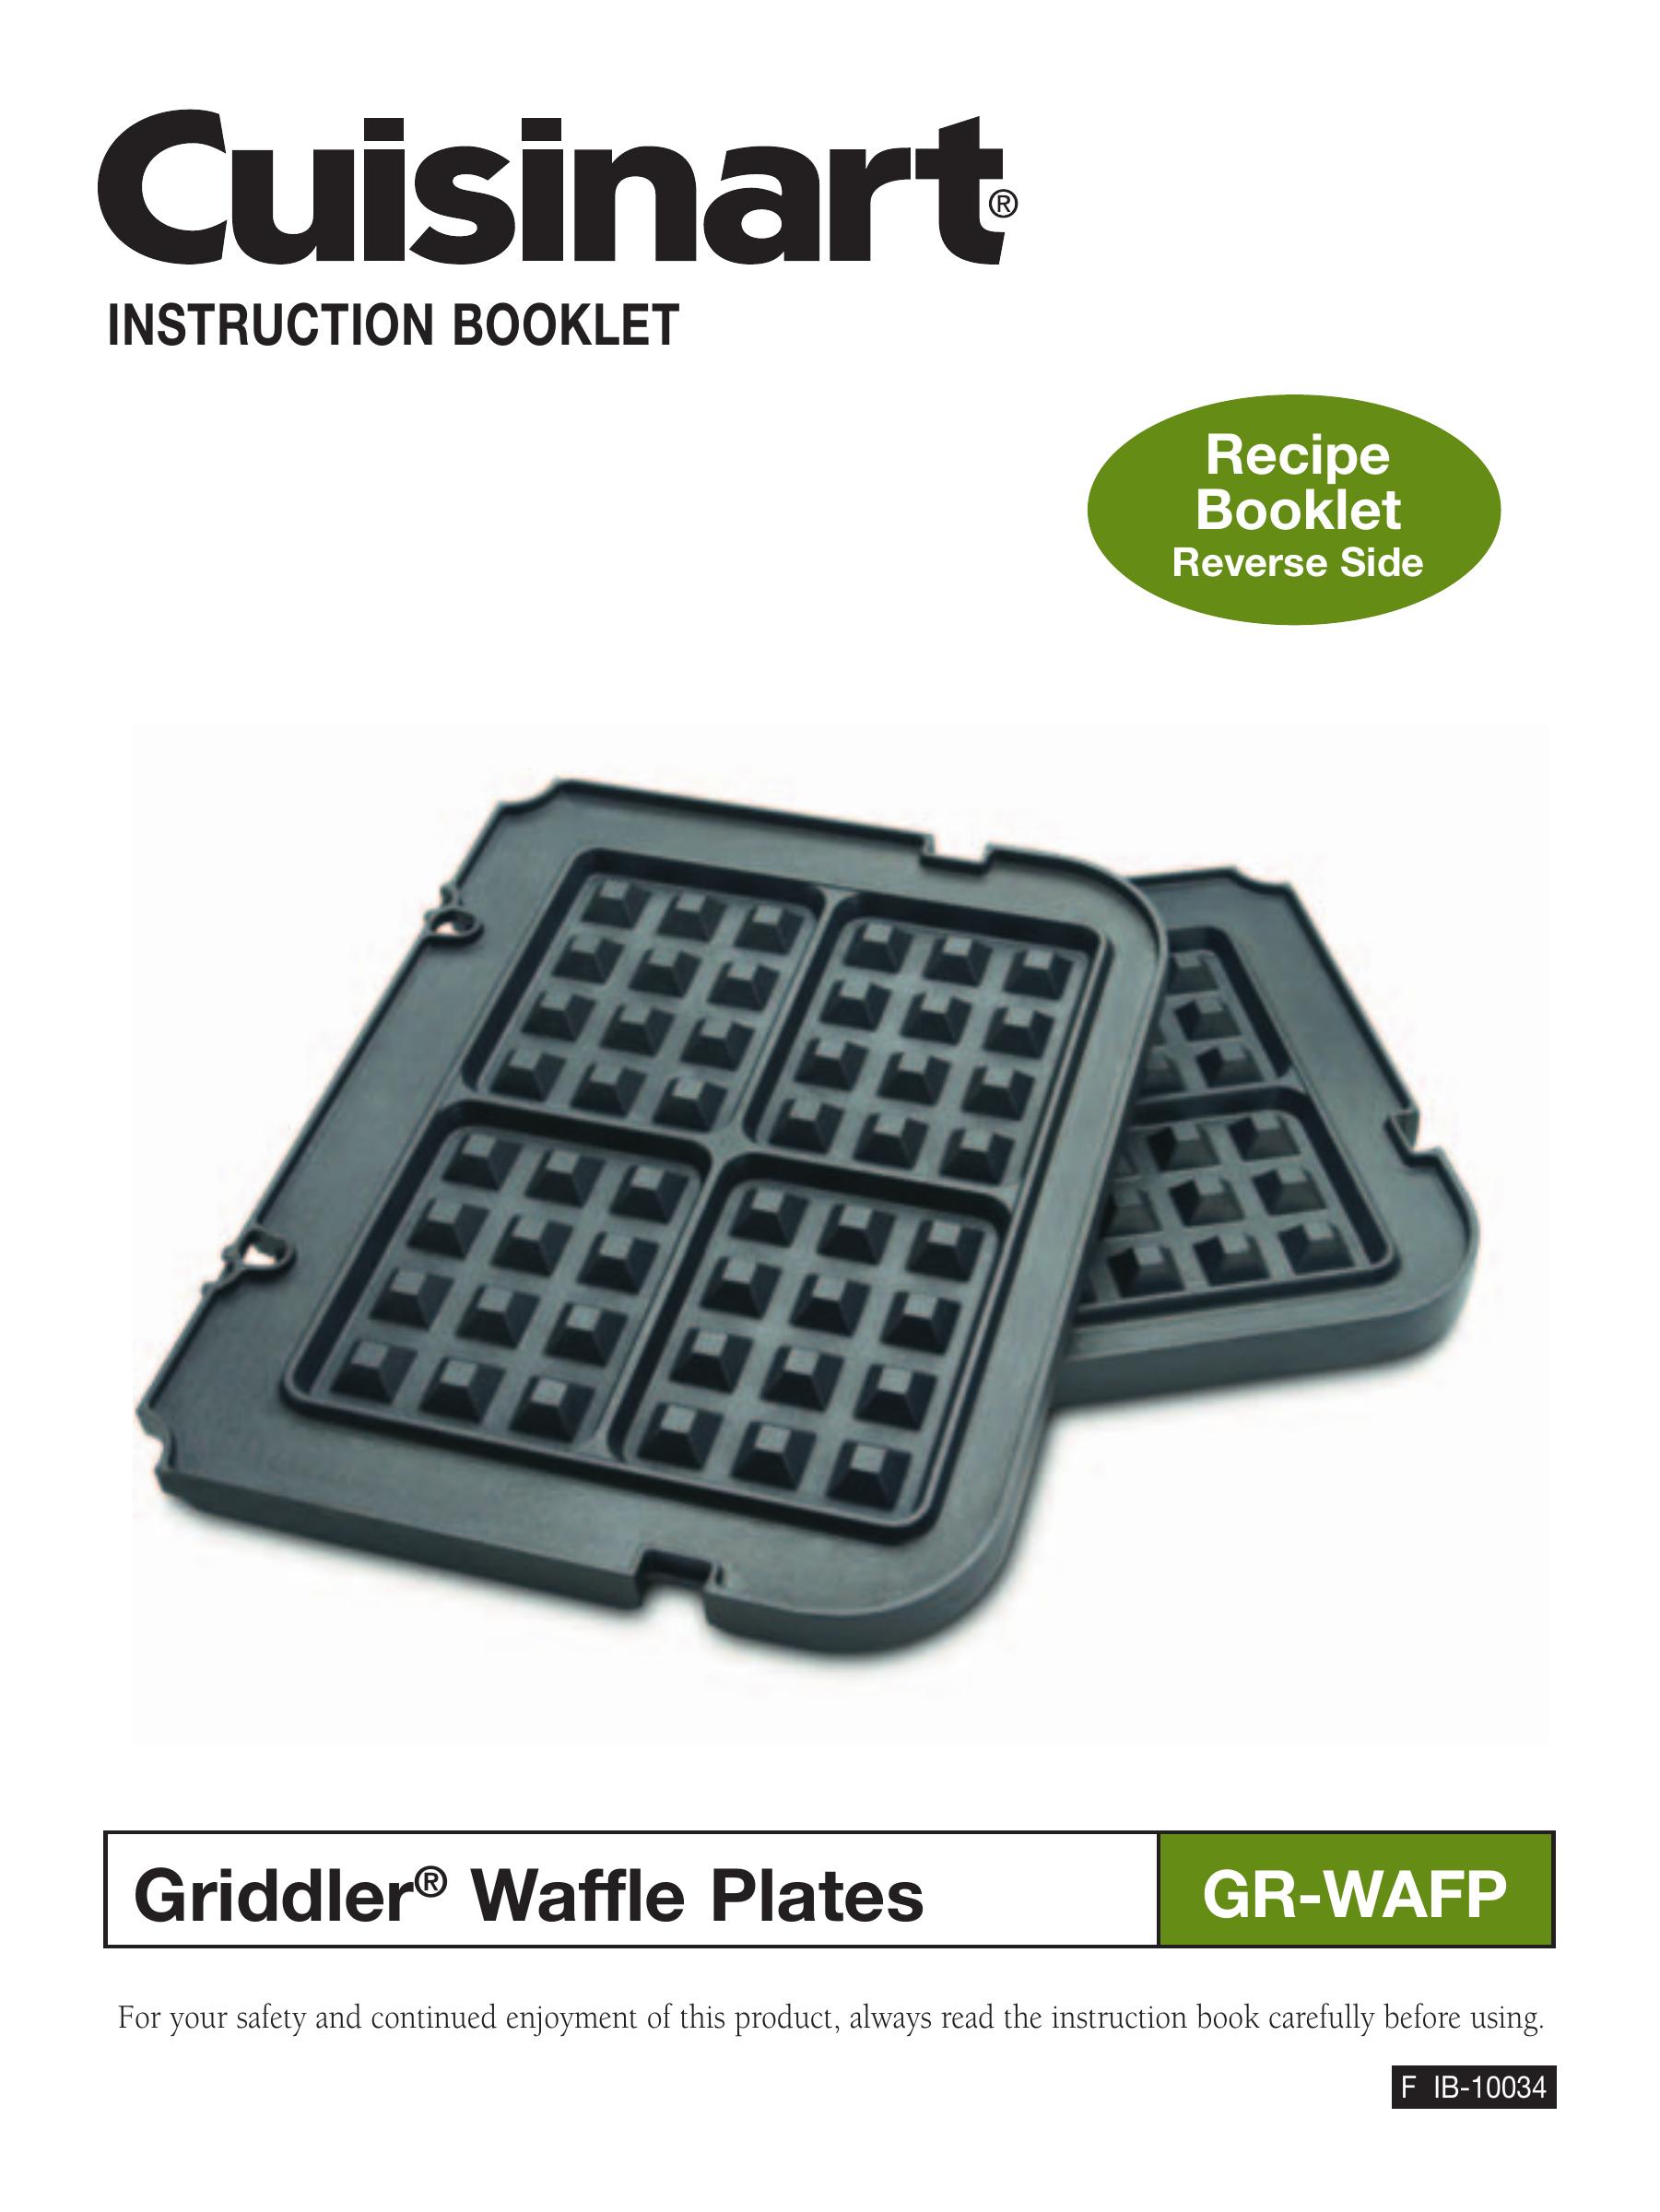 Cuisinart GR-WAFP Waffle Iron User Manual